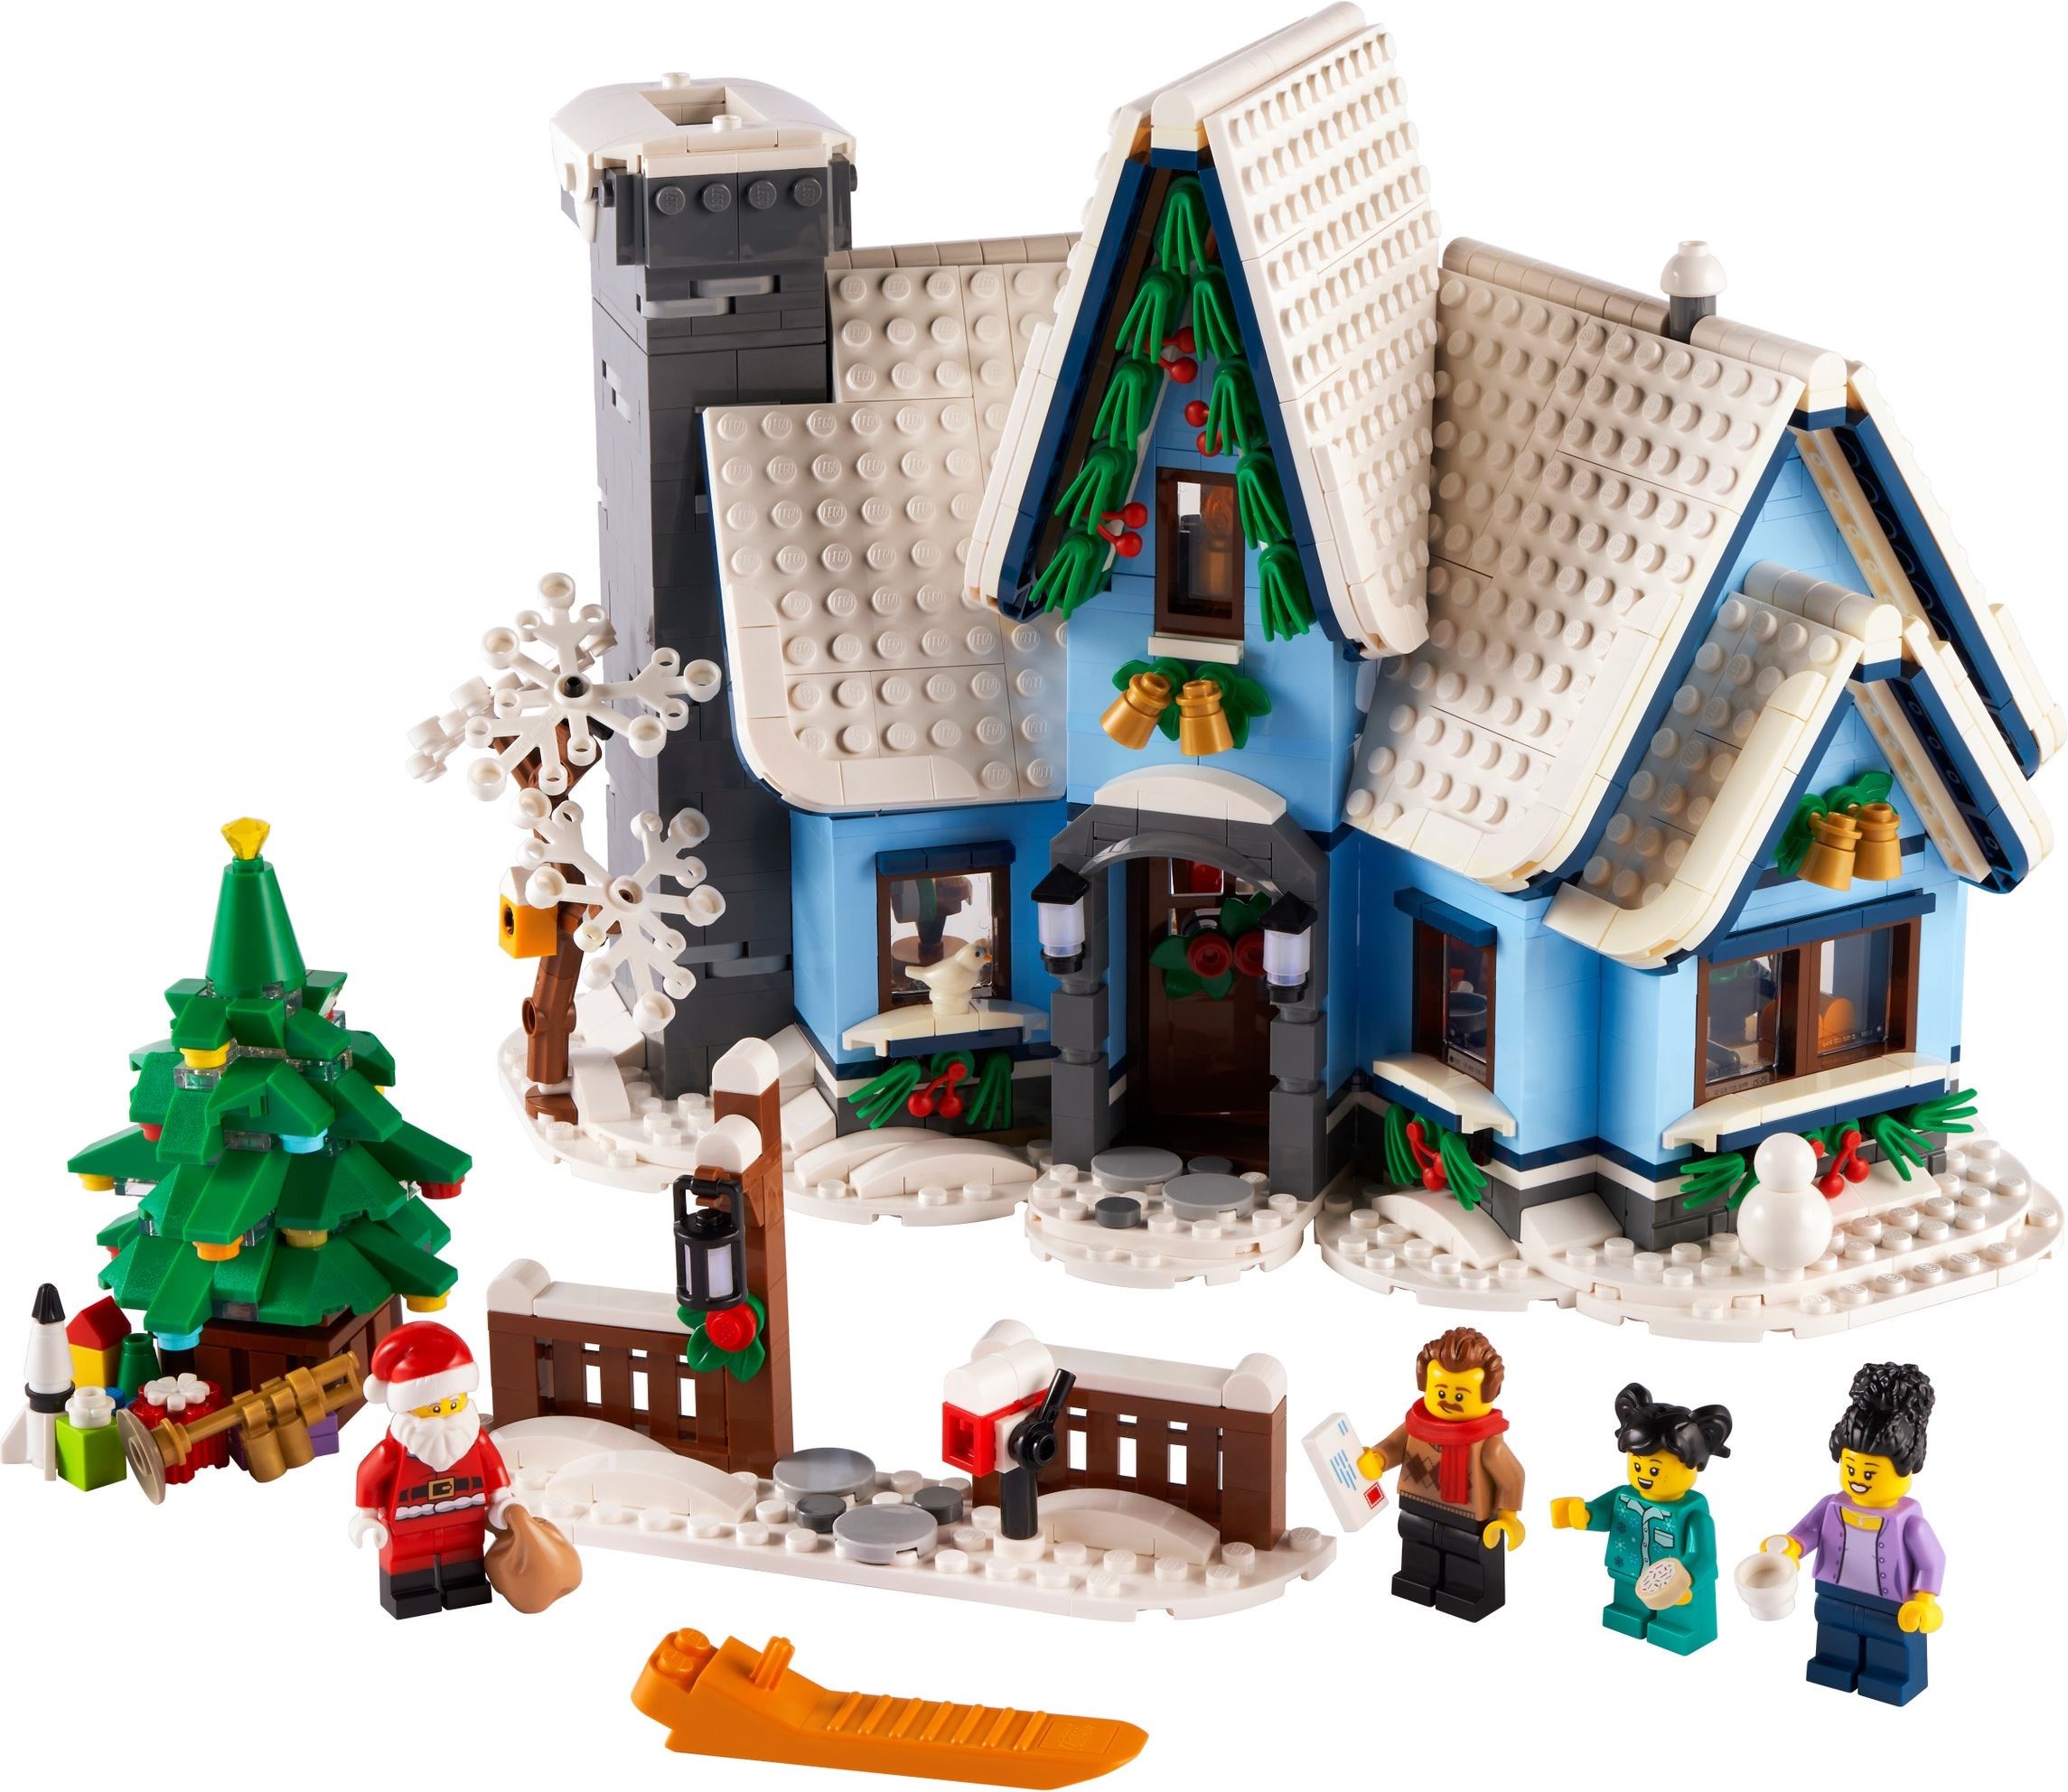 NEW LEGO CITY WINTER CHRISTMAS SCENES SANTA SKIER SNOWBOARDER ICE PICK 1S 60155 